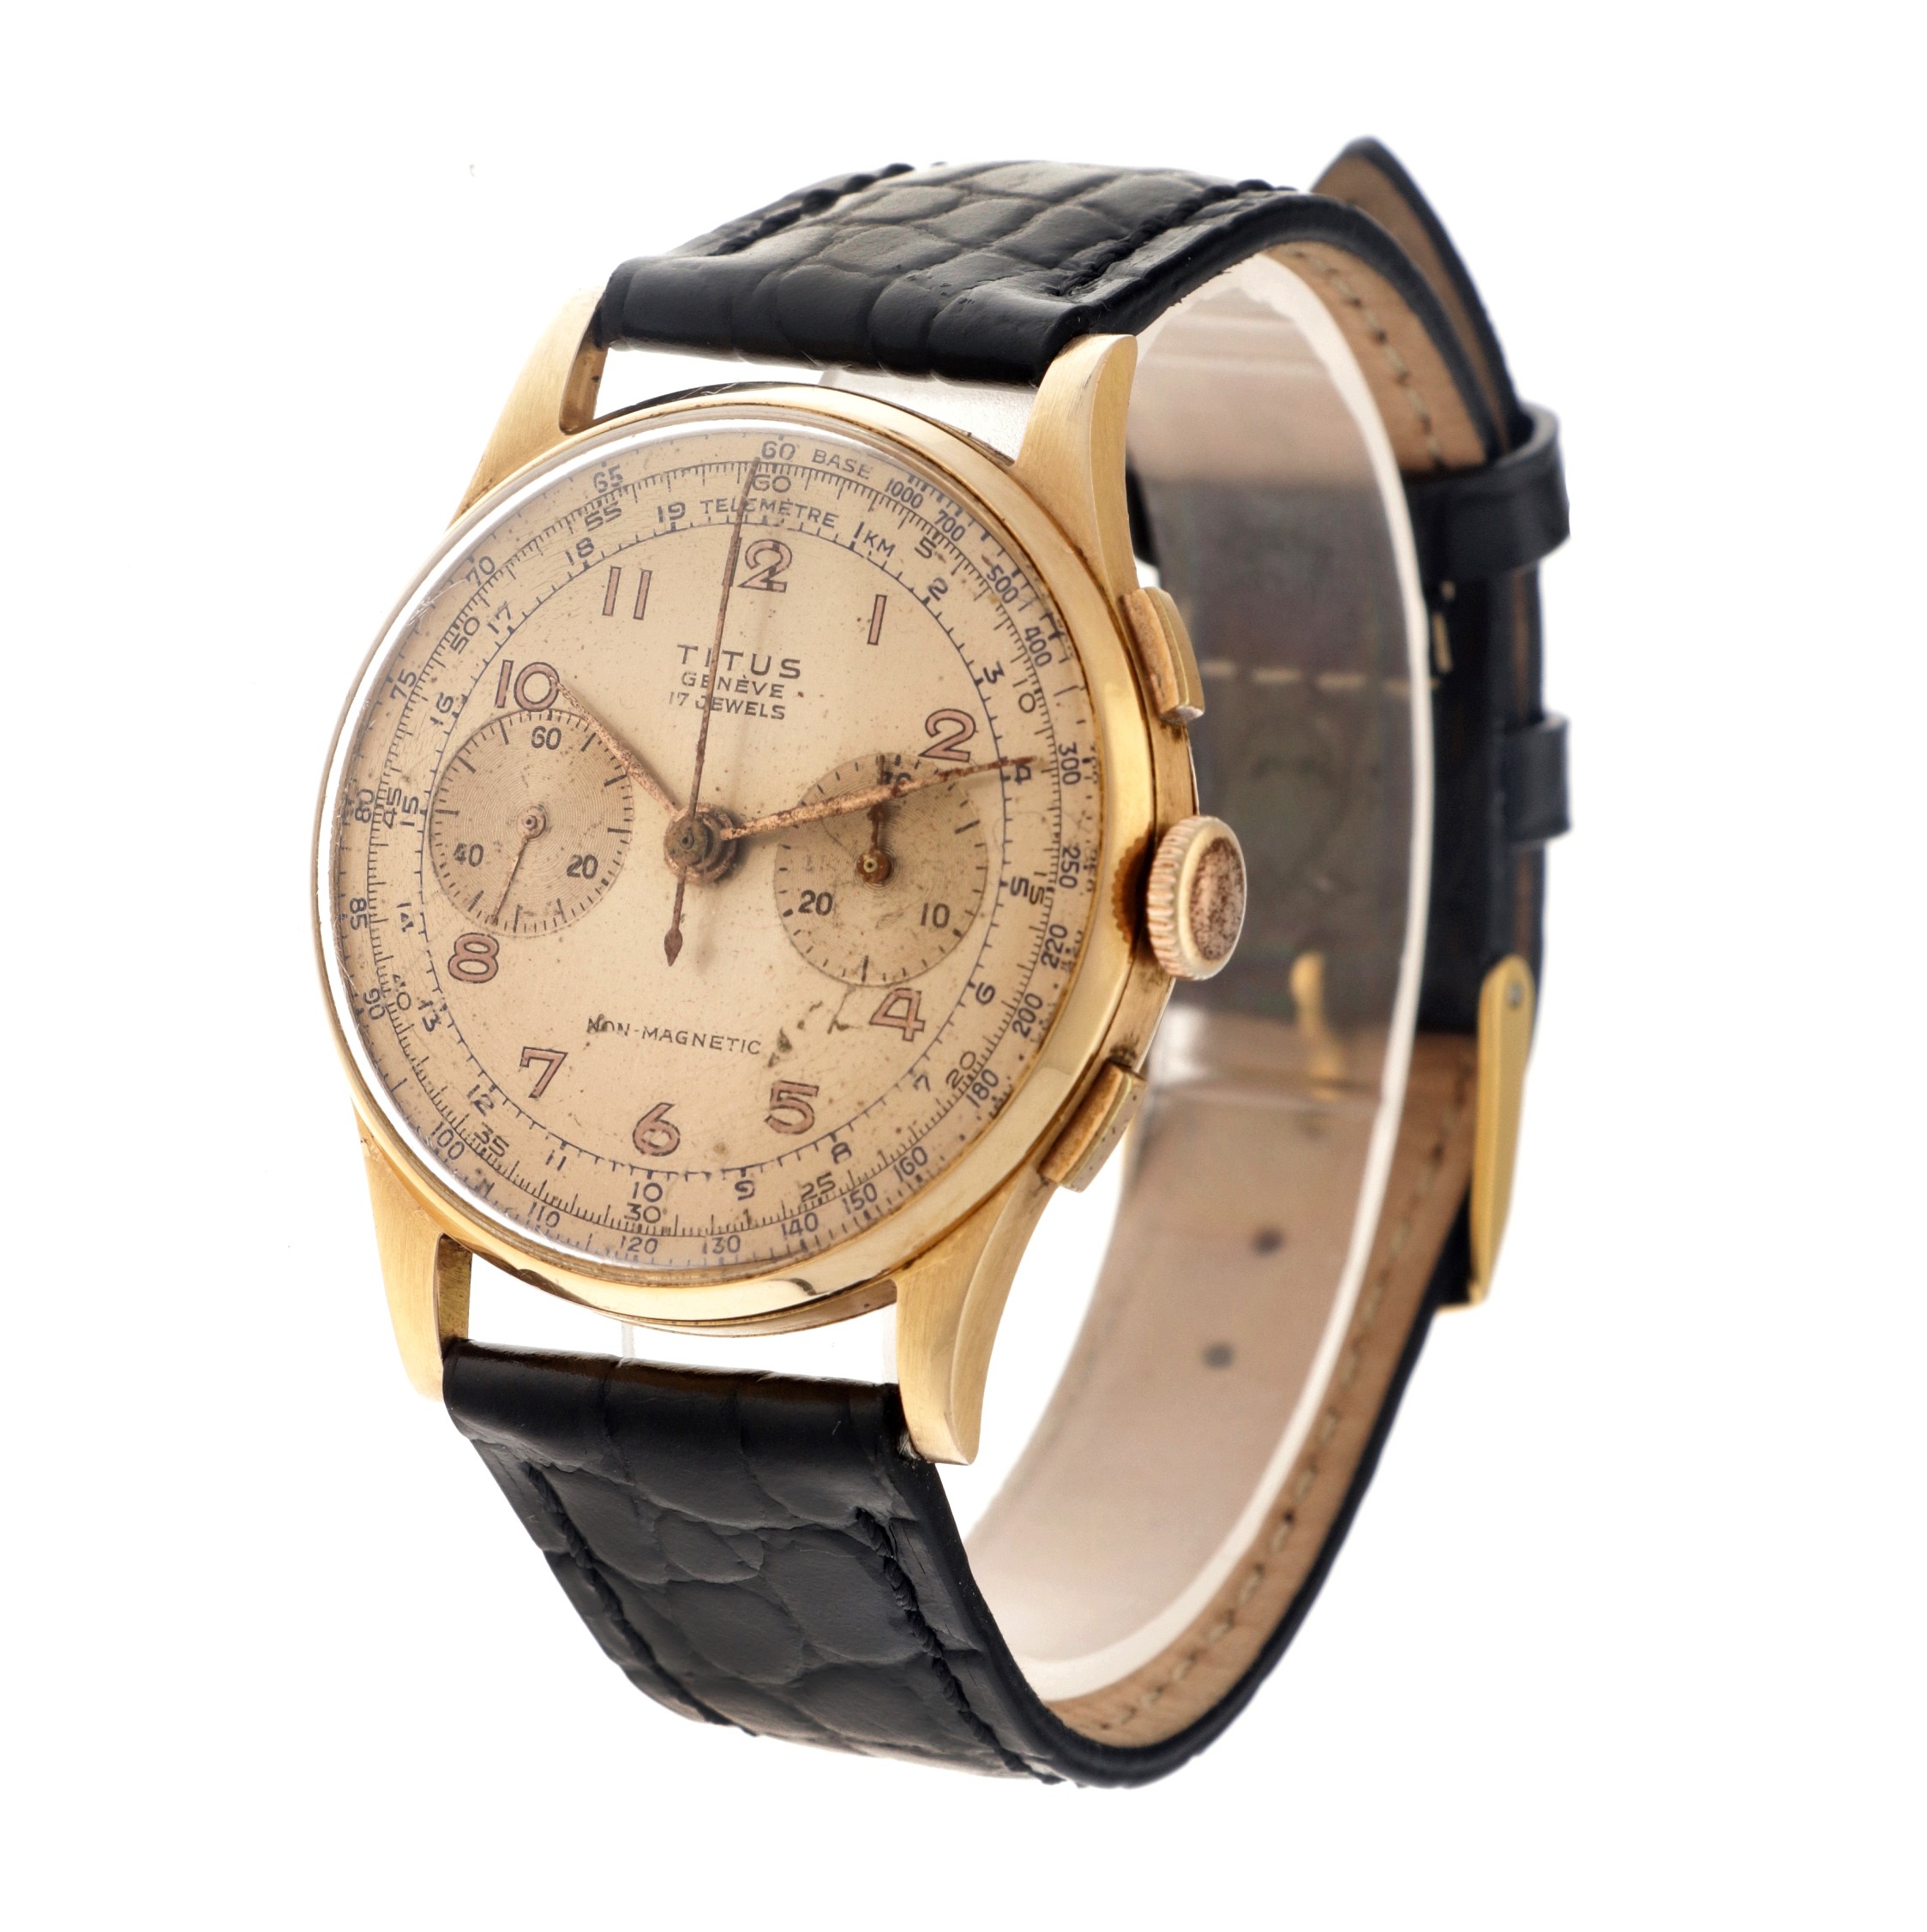 No Reserve - Titus Chronograph Suisse - Men's watch. - Image 2 of 7